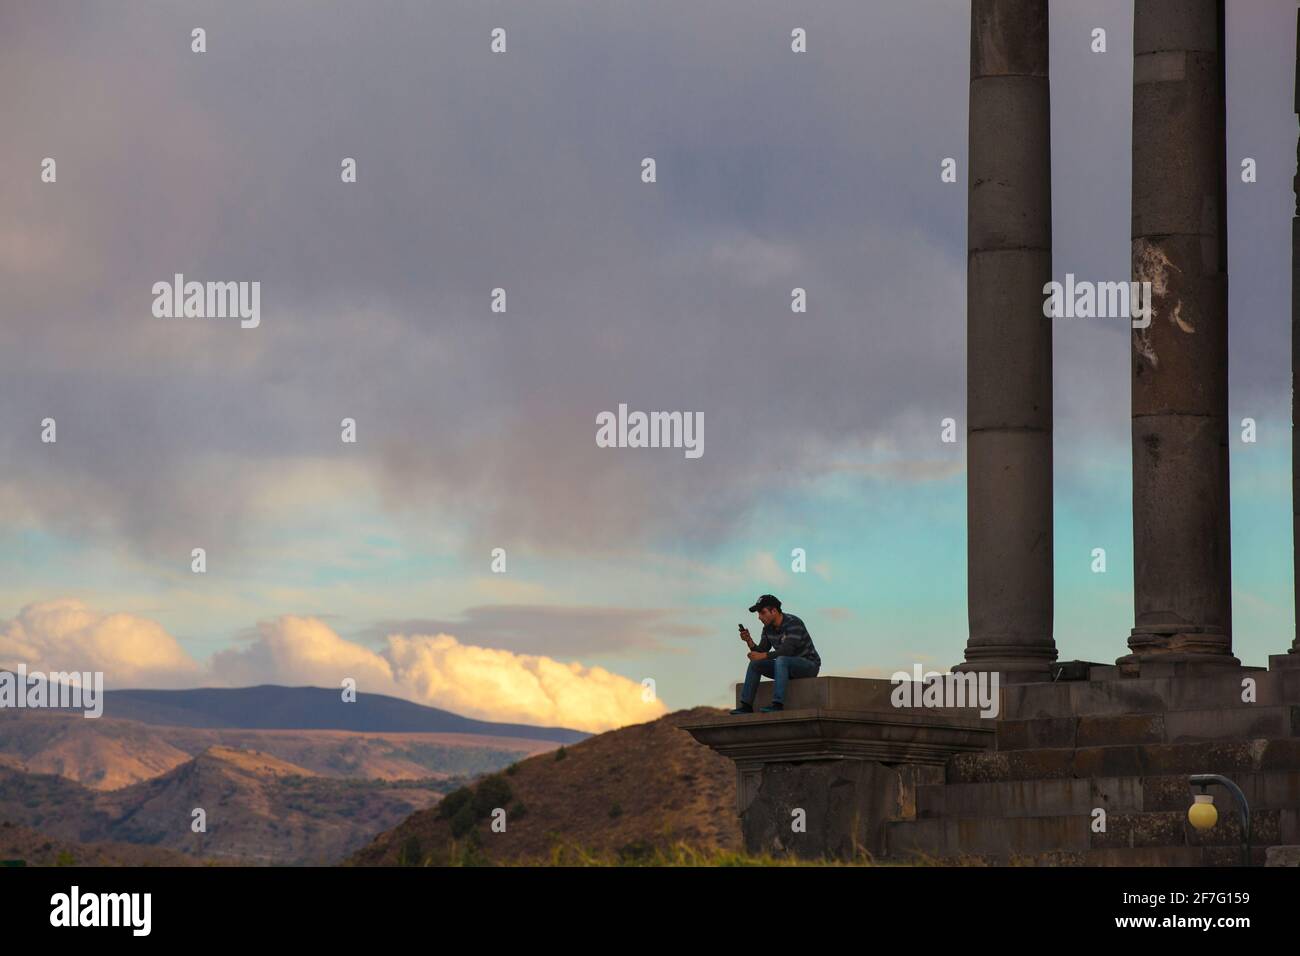 Armenia, Yerevan, Garni, Tourist sitting by Garni Temple looking at mobile phone Stock Photo